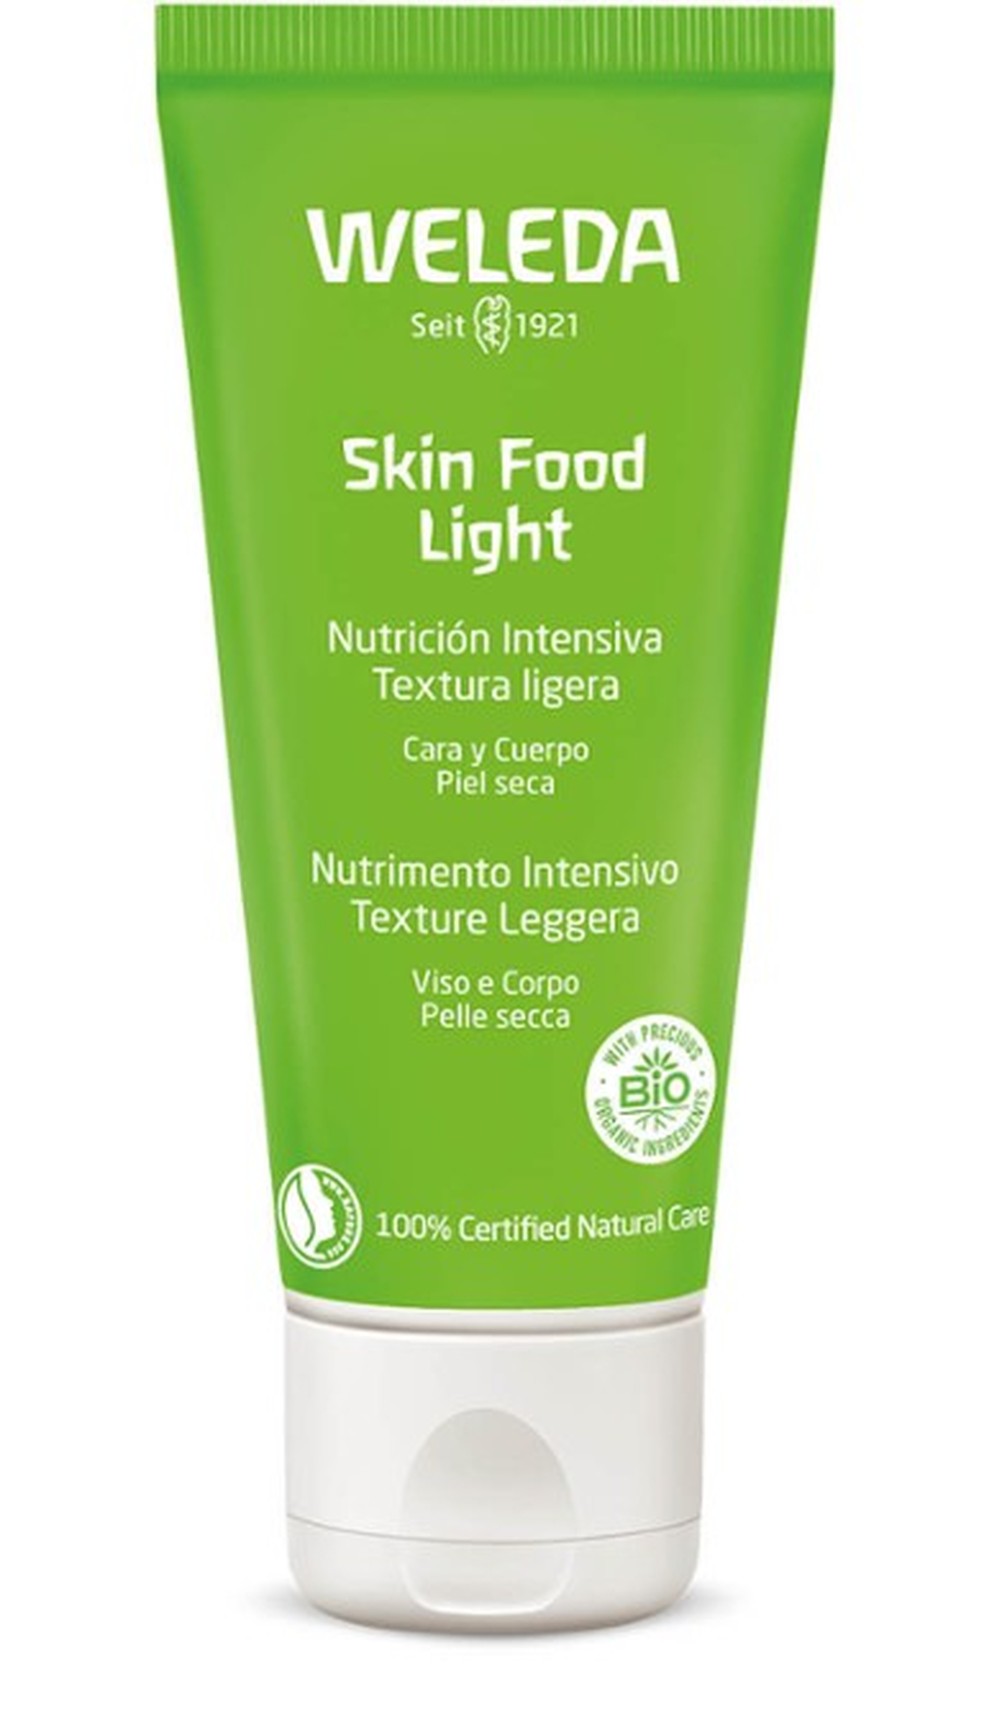 Skin Food Light, Weleda — Foto: Divulgação